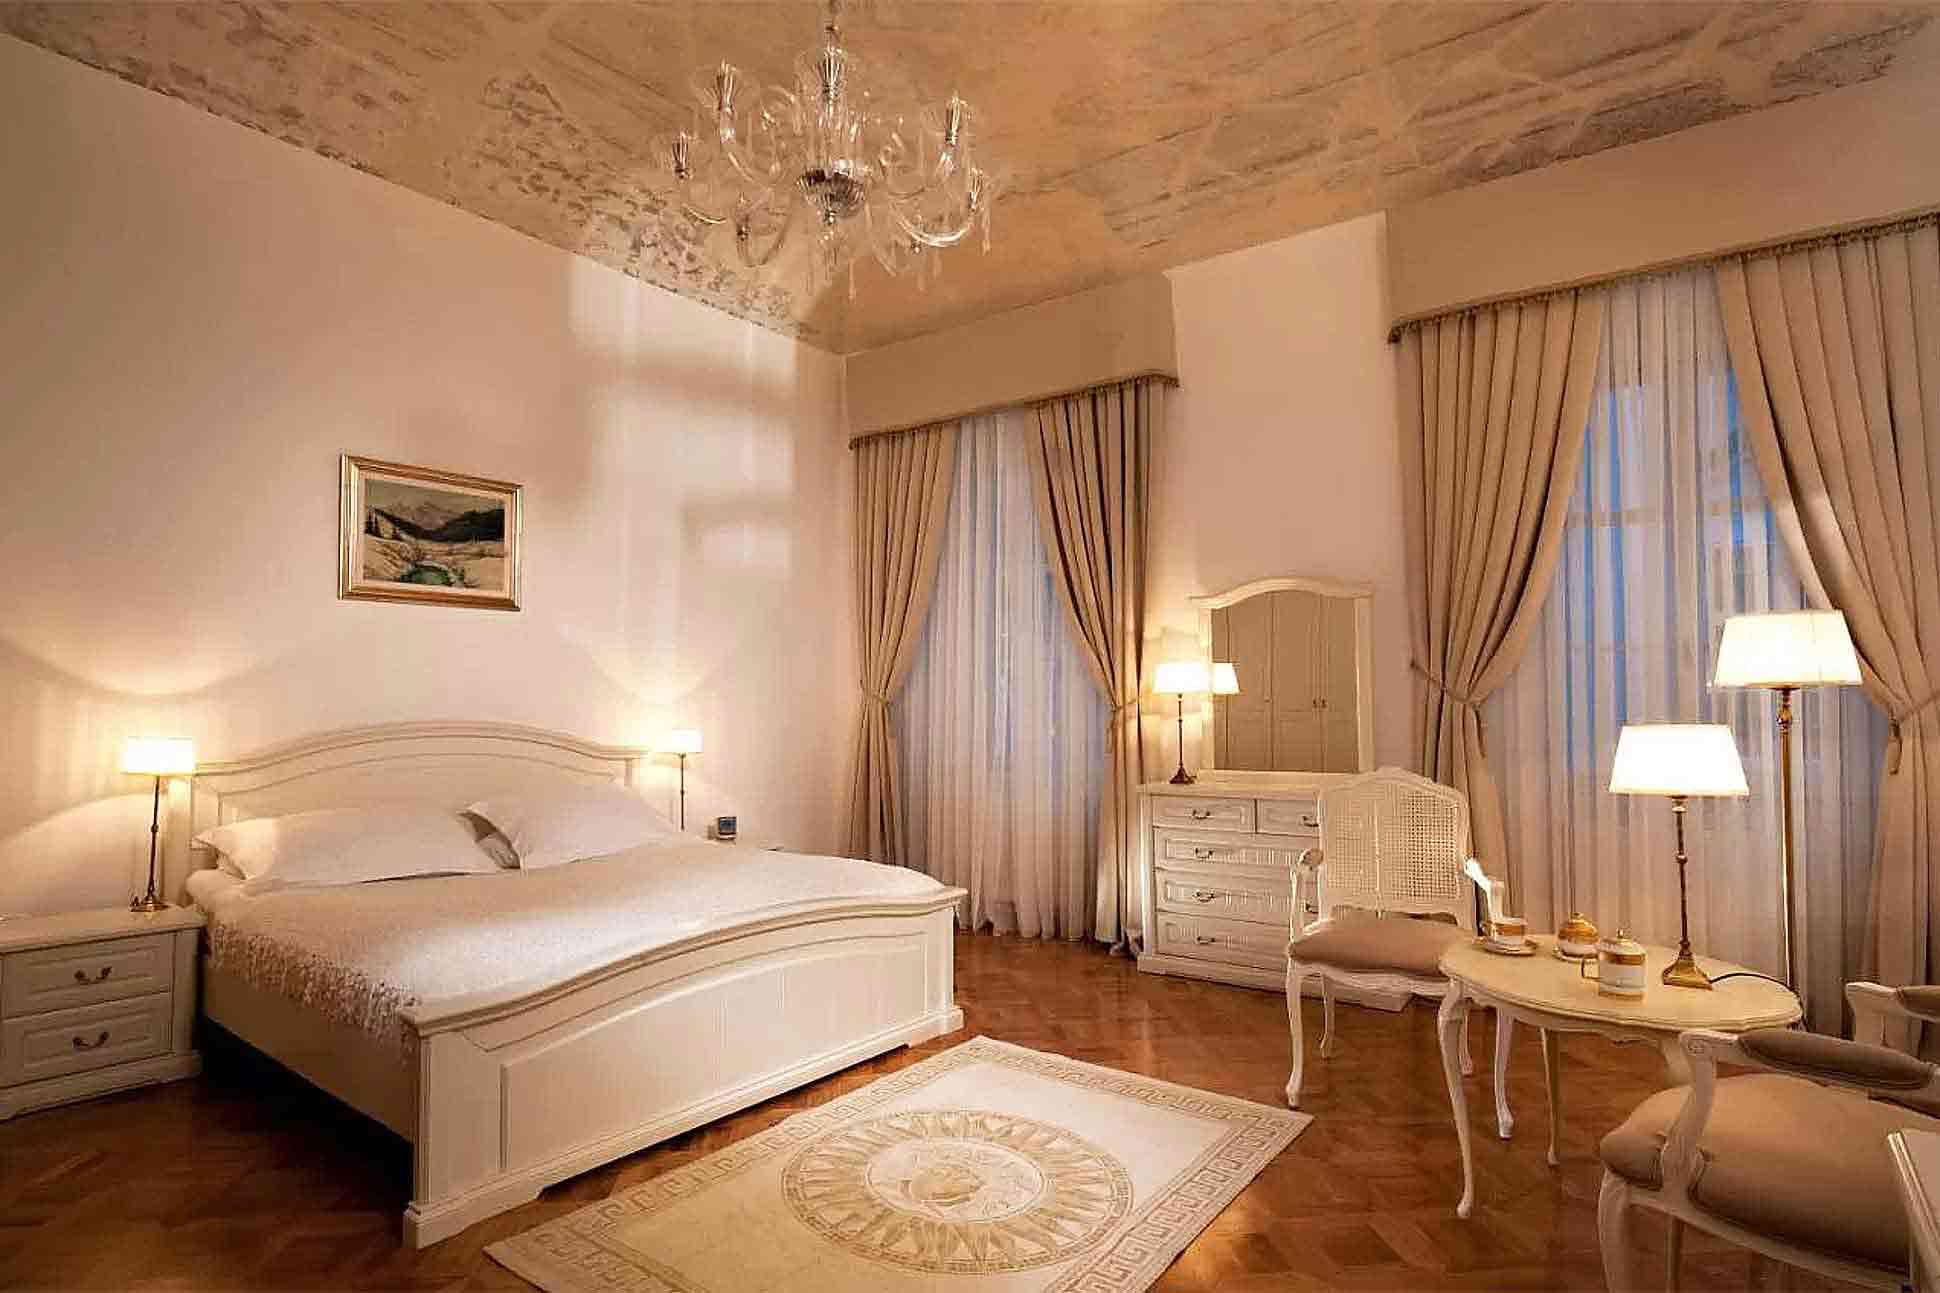 Suite at Antiq Palace and Spa, Ljubljana, Slovenia